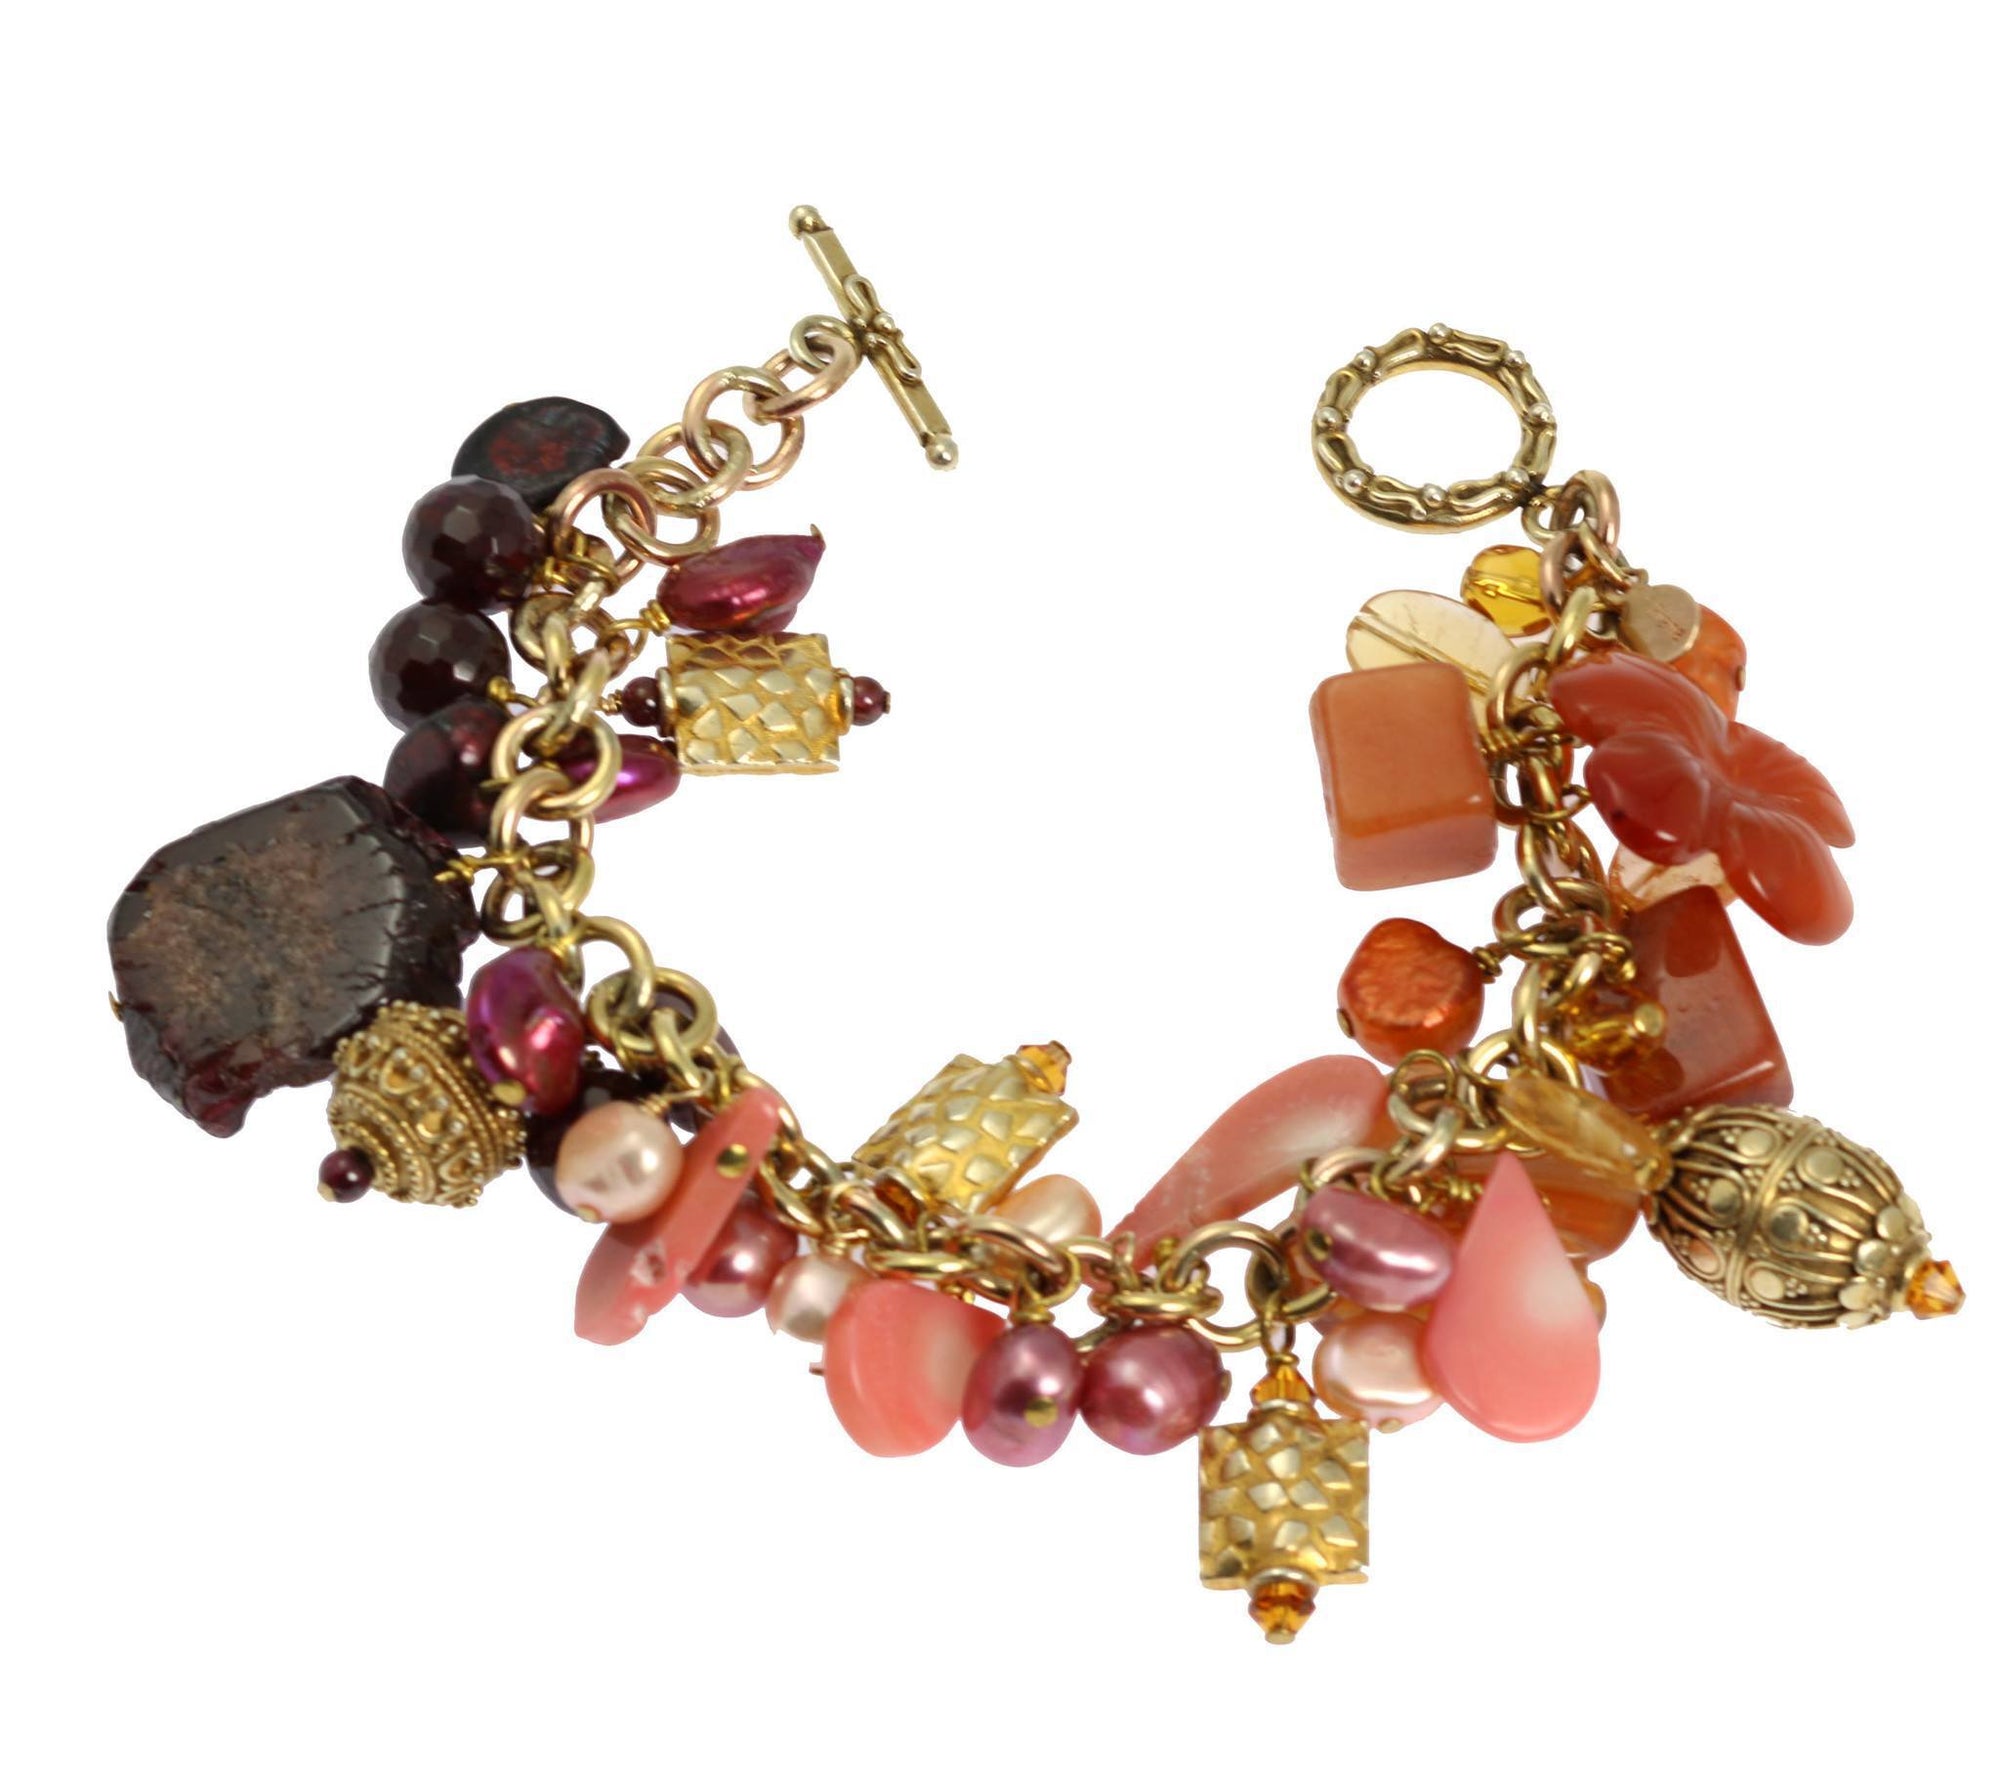 Handmade Vermeil Jewelry Collection